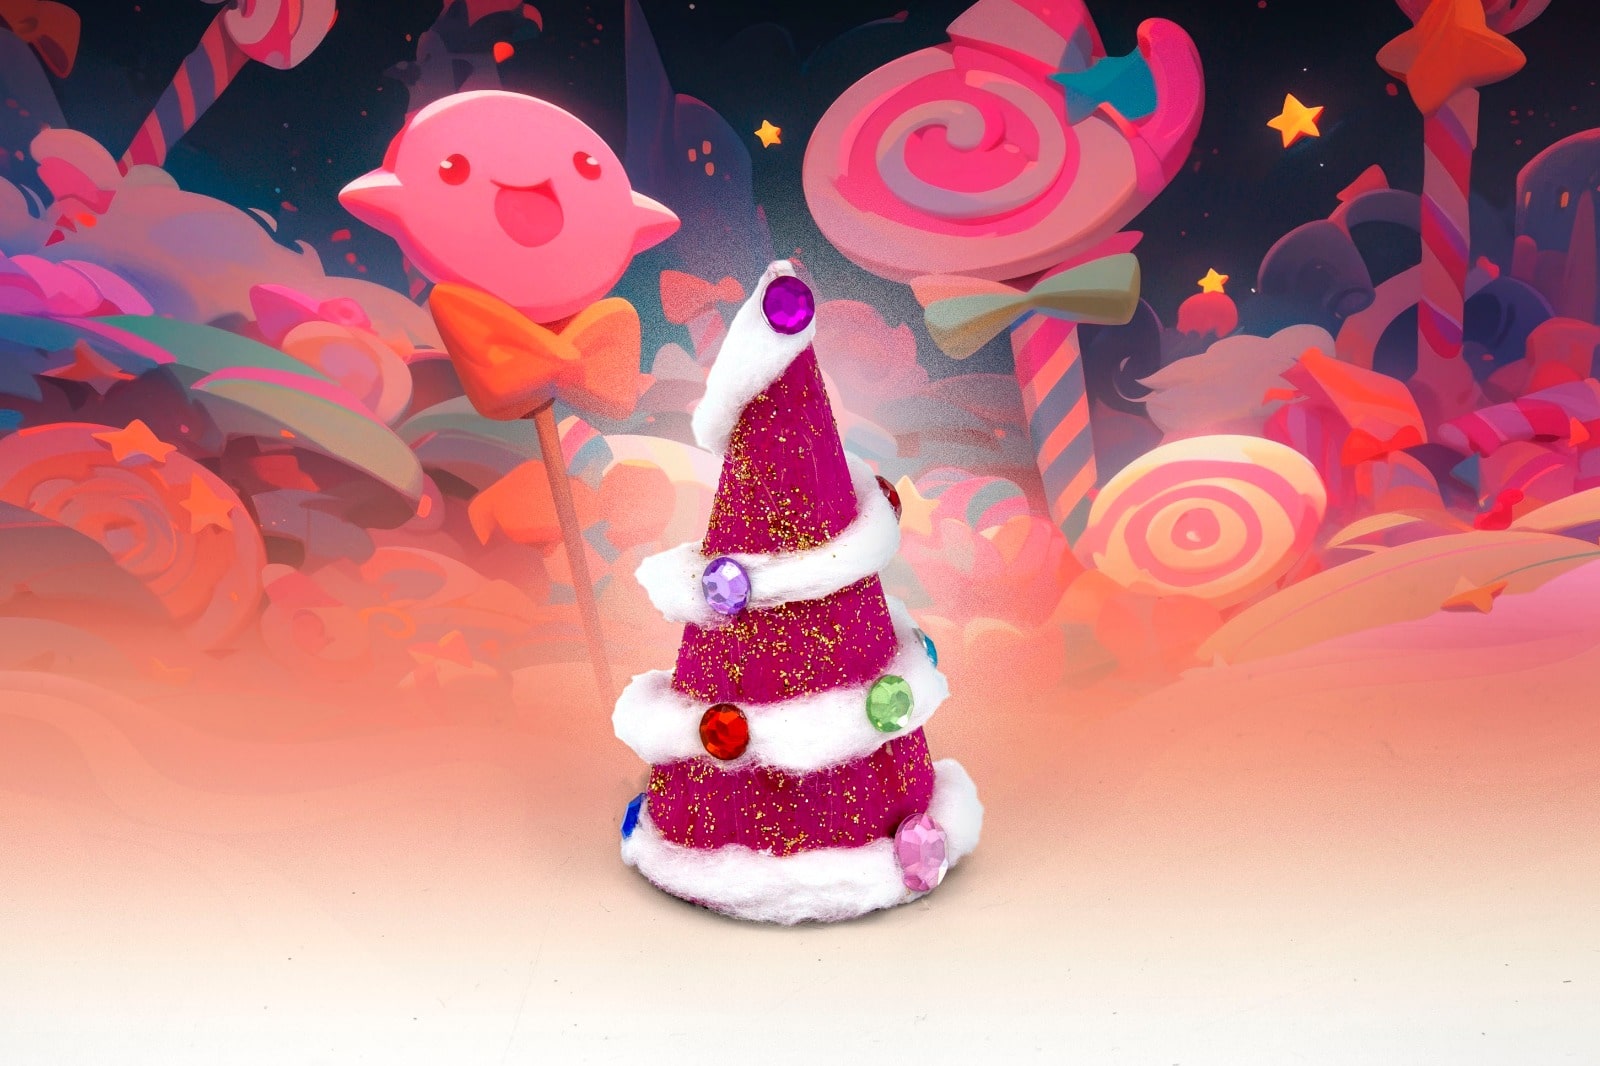 Bastelset Adventszeit - Candyland inklusive bunter LED-Lichter